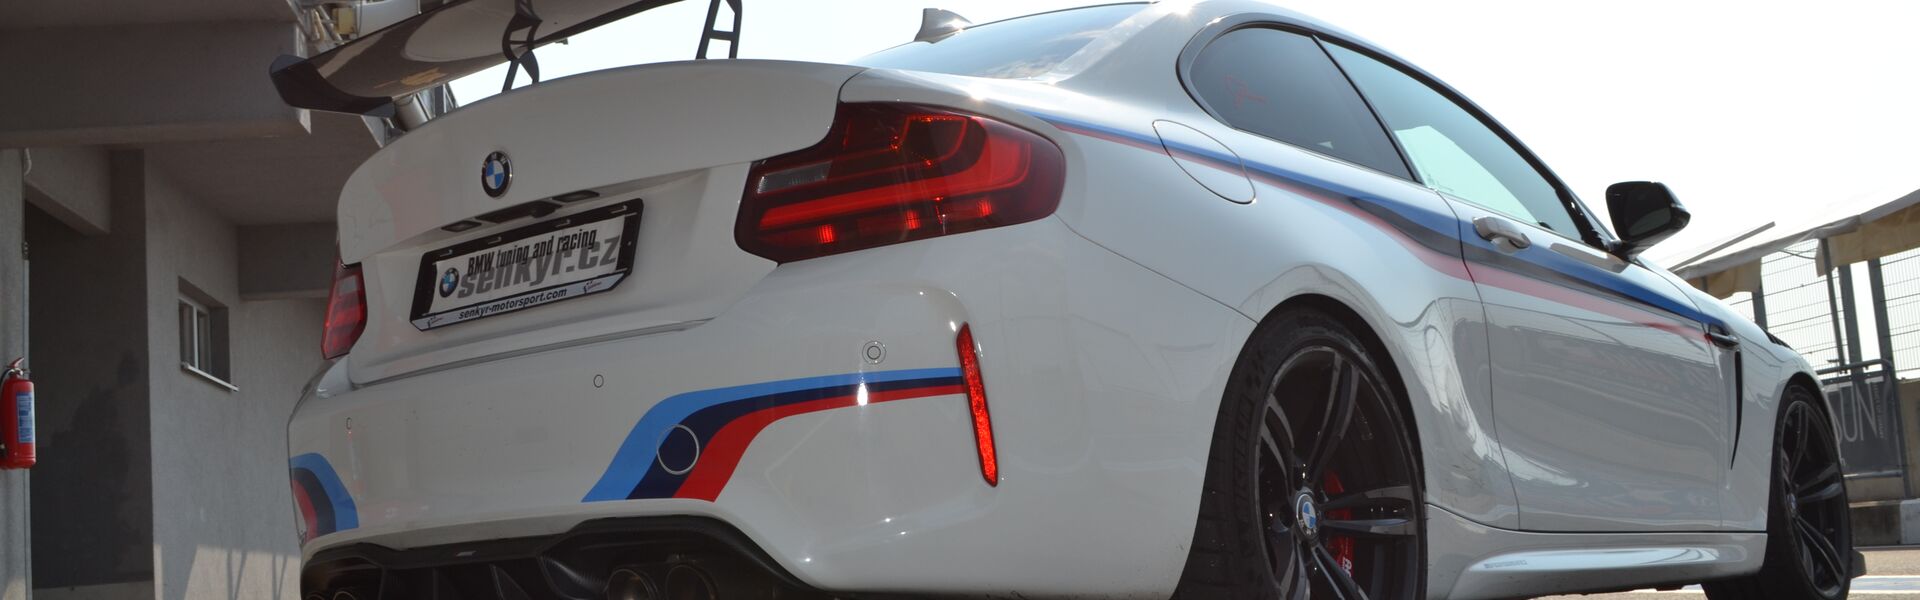 Bodykit/ Aerodynamické prvky pro automobil BMW M5 E39